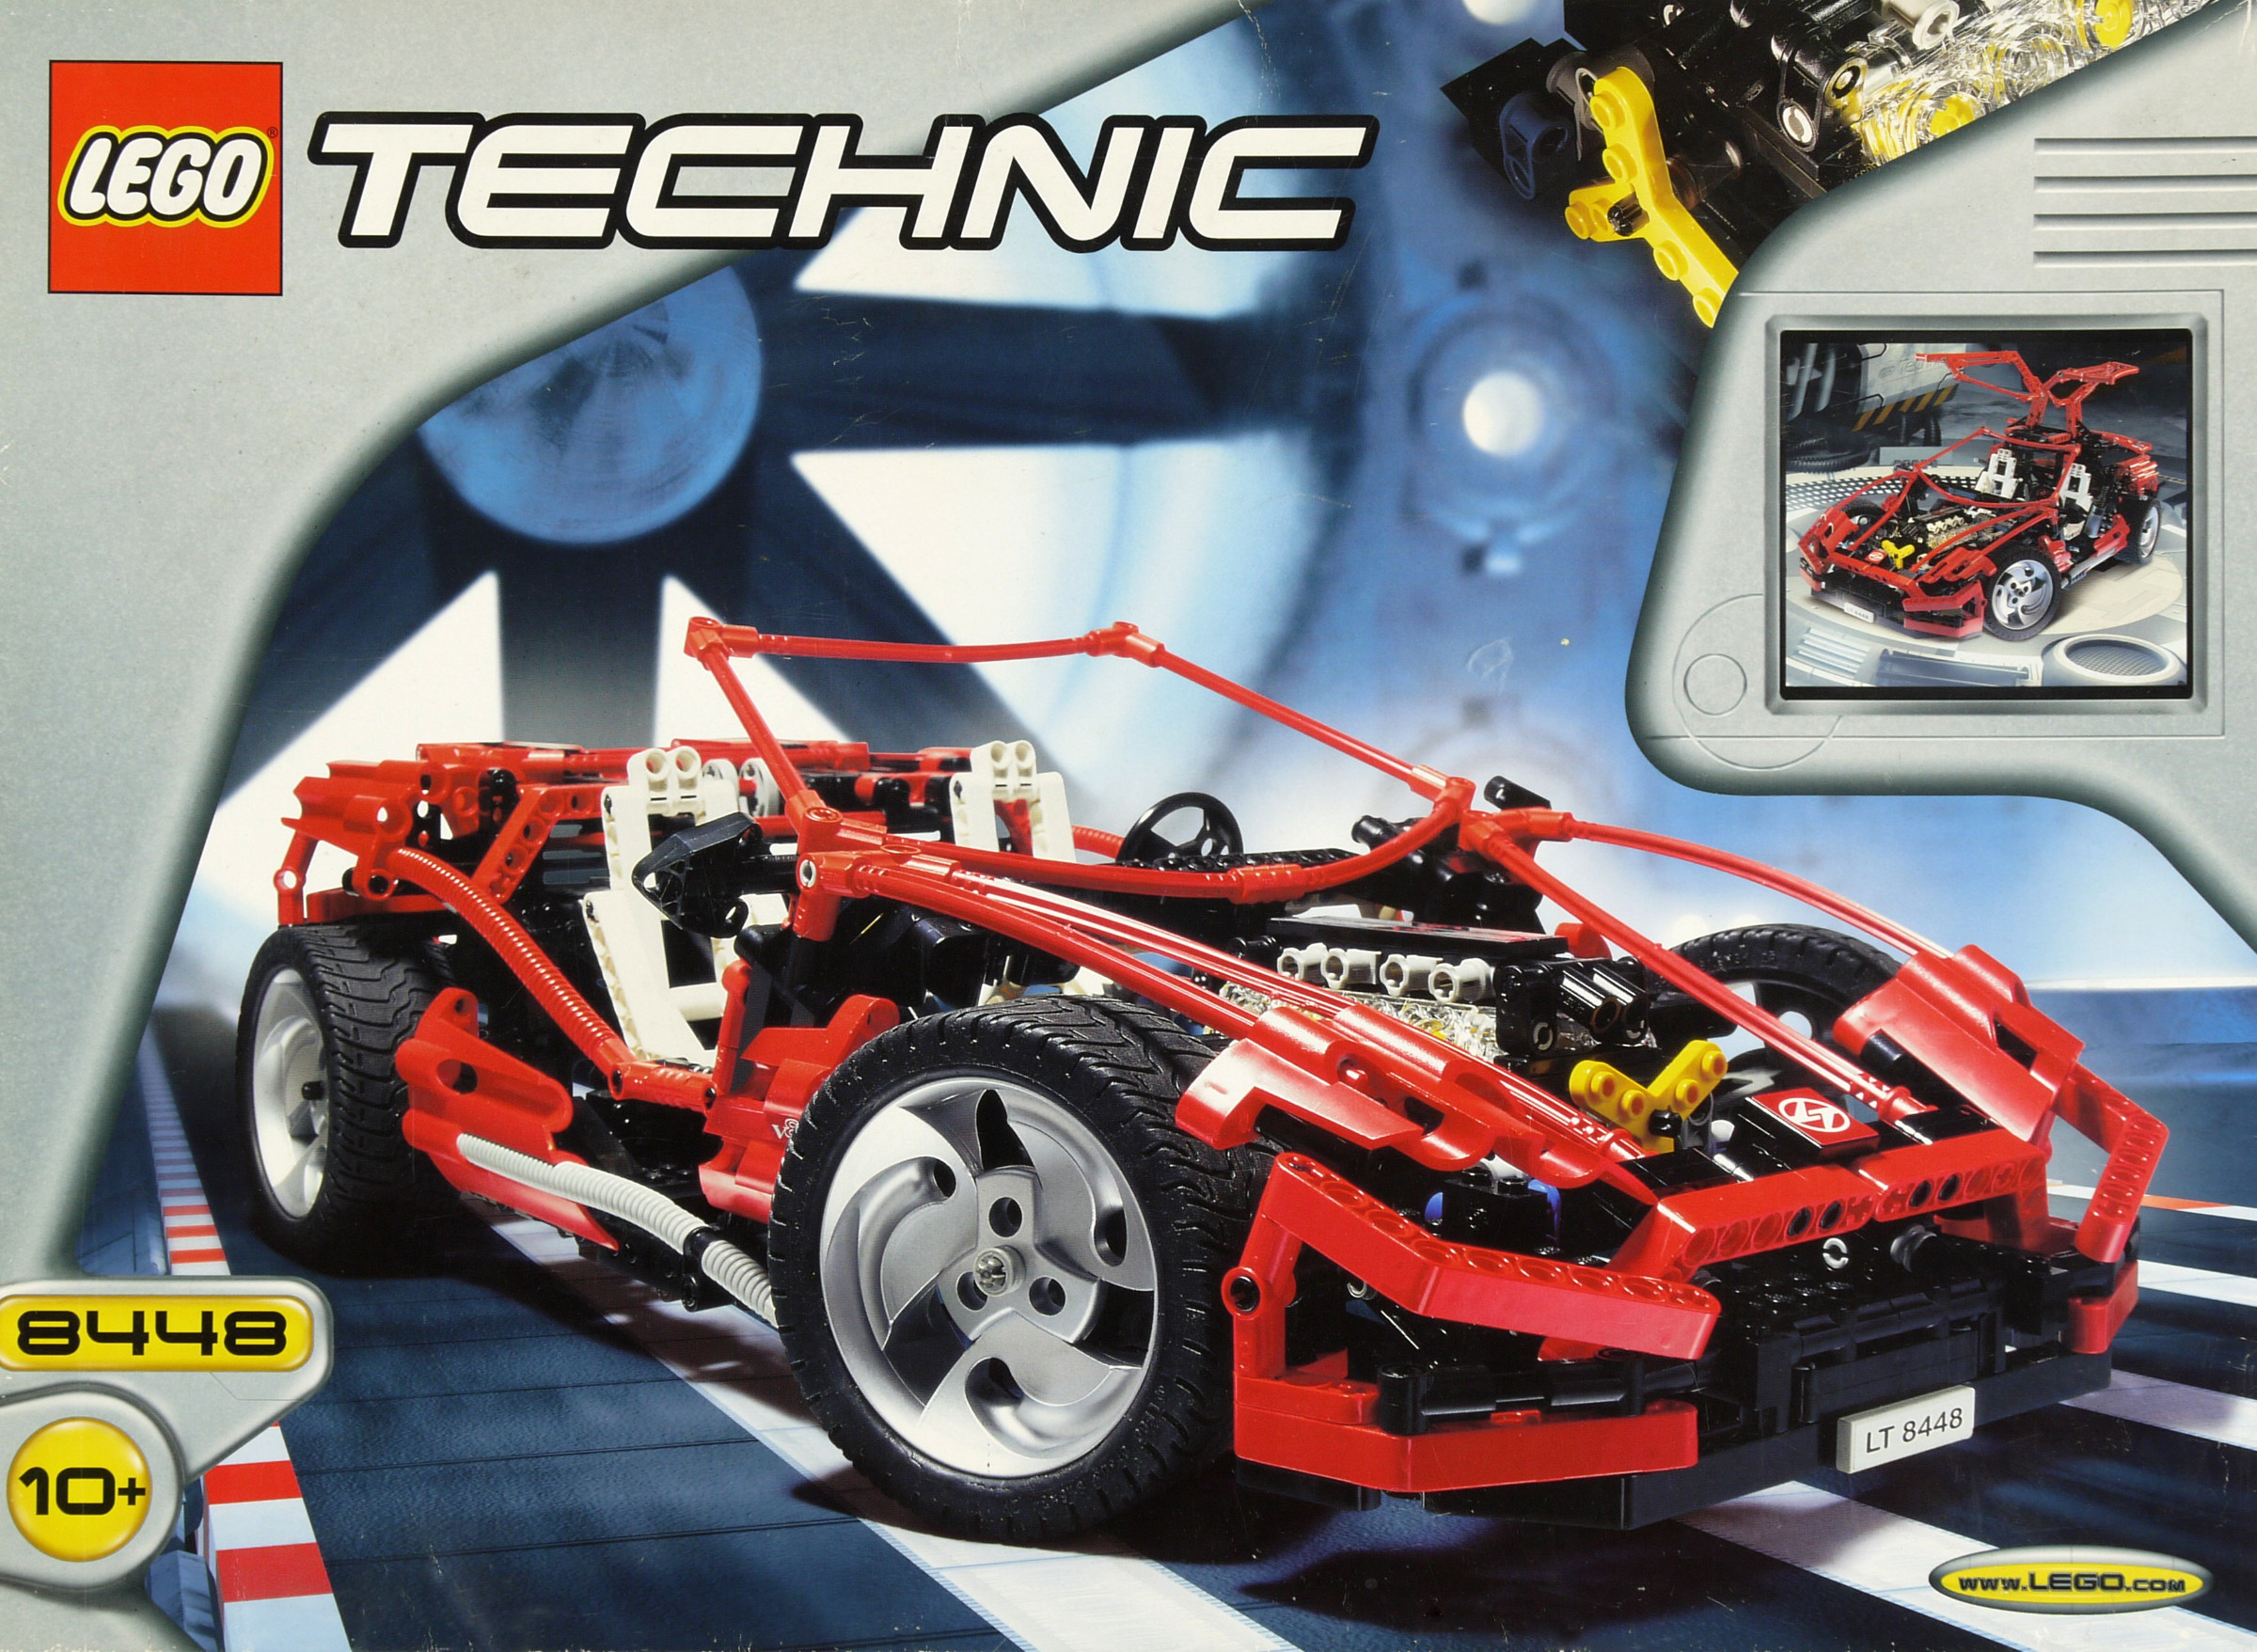 LEGO 8448 Super Street iconic Technic super car | Brickset